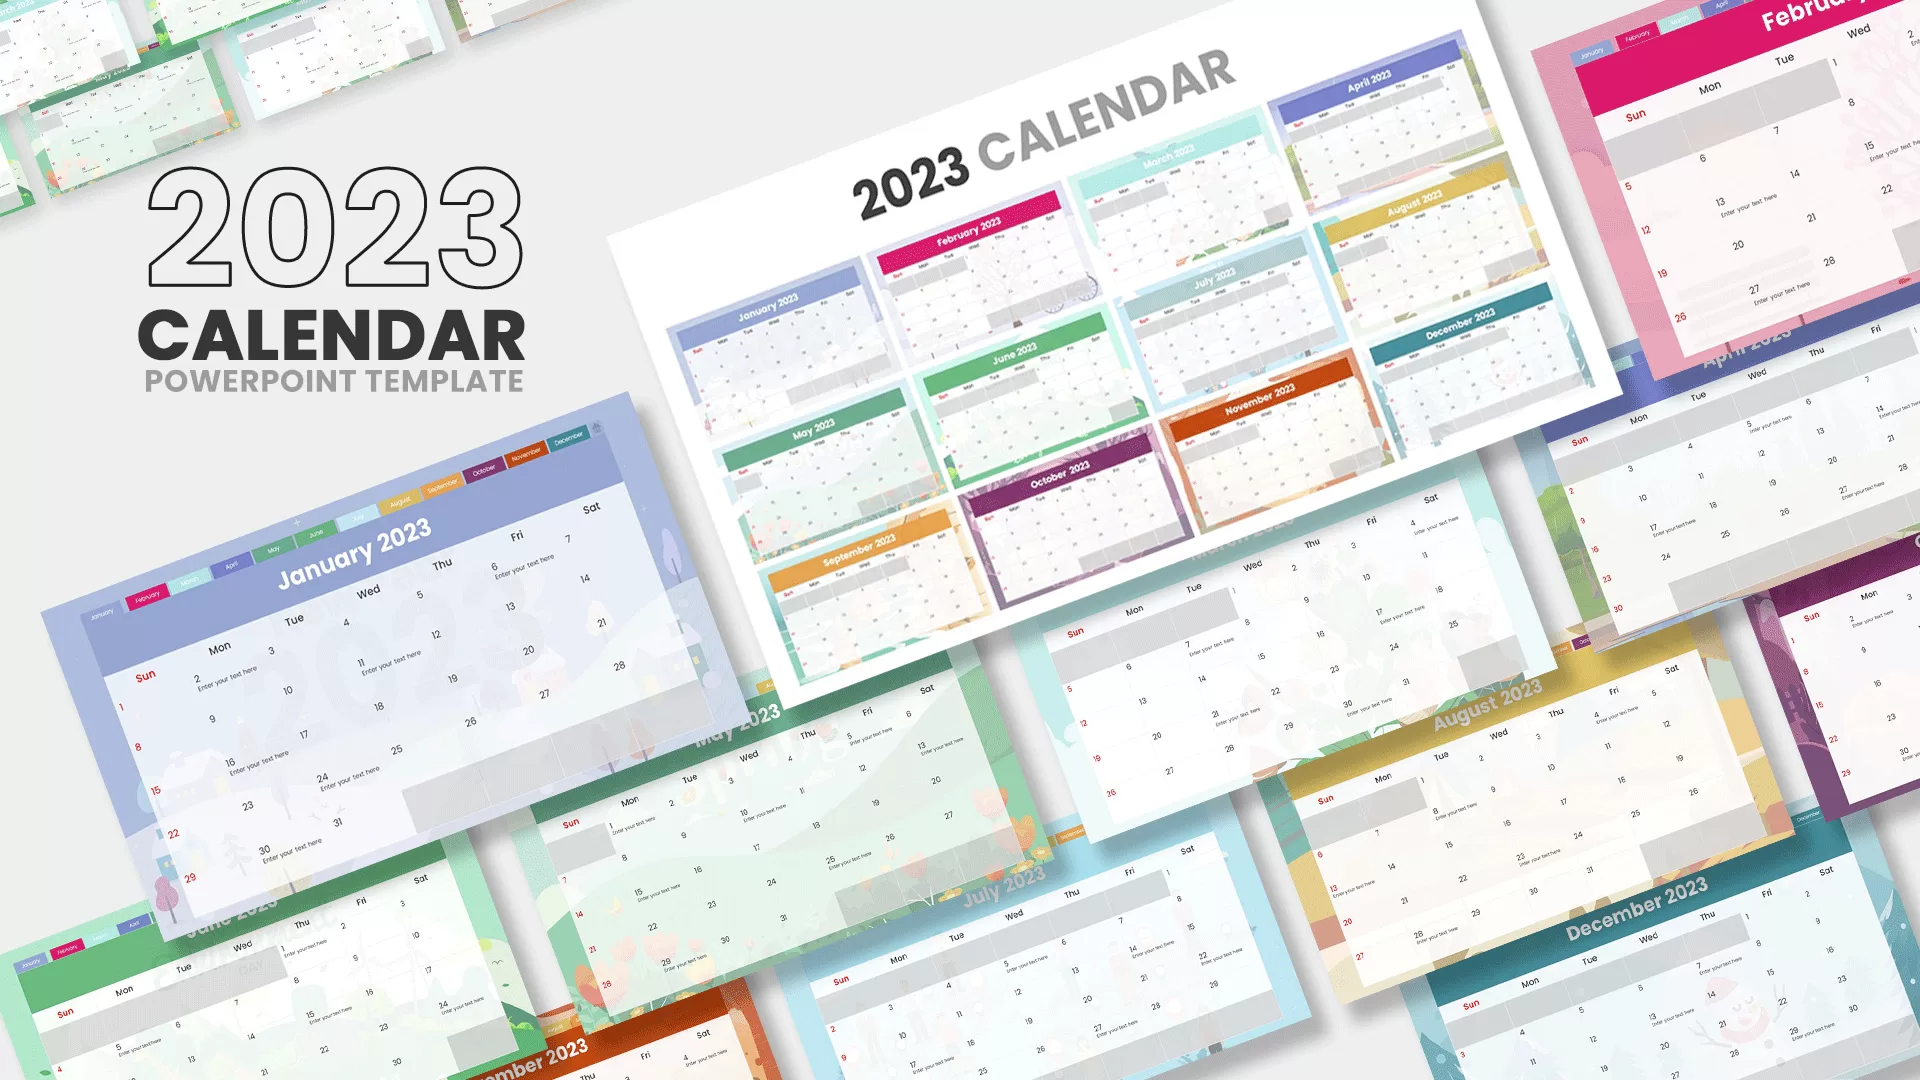 Interactive-Calendar-Feature-Image